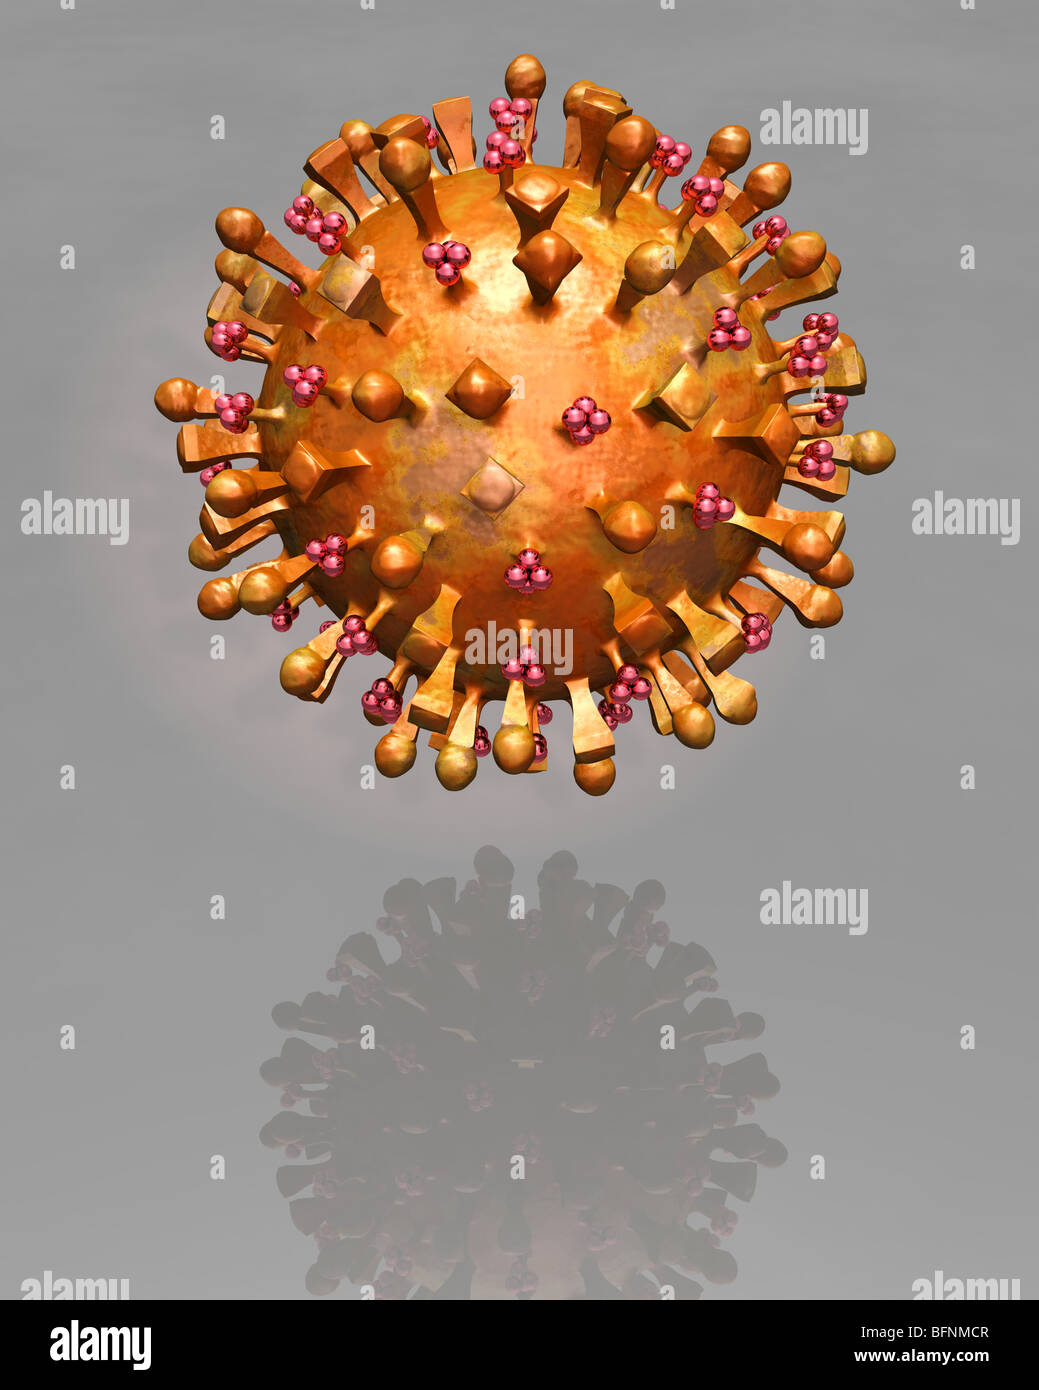 Computer generated three dimensional model of the H5N1 avian influenza virus. Stock Photo